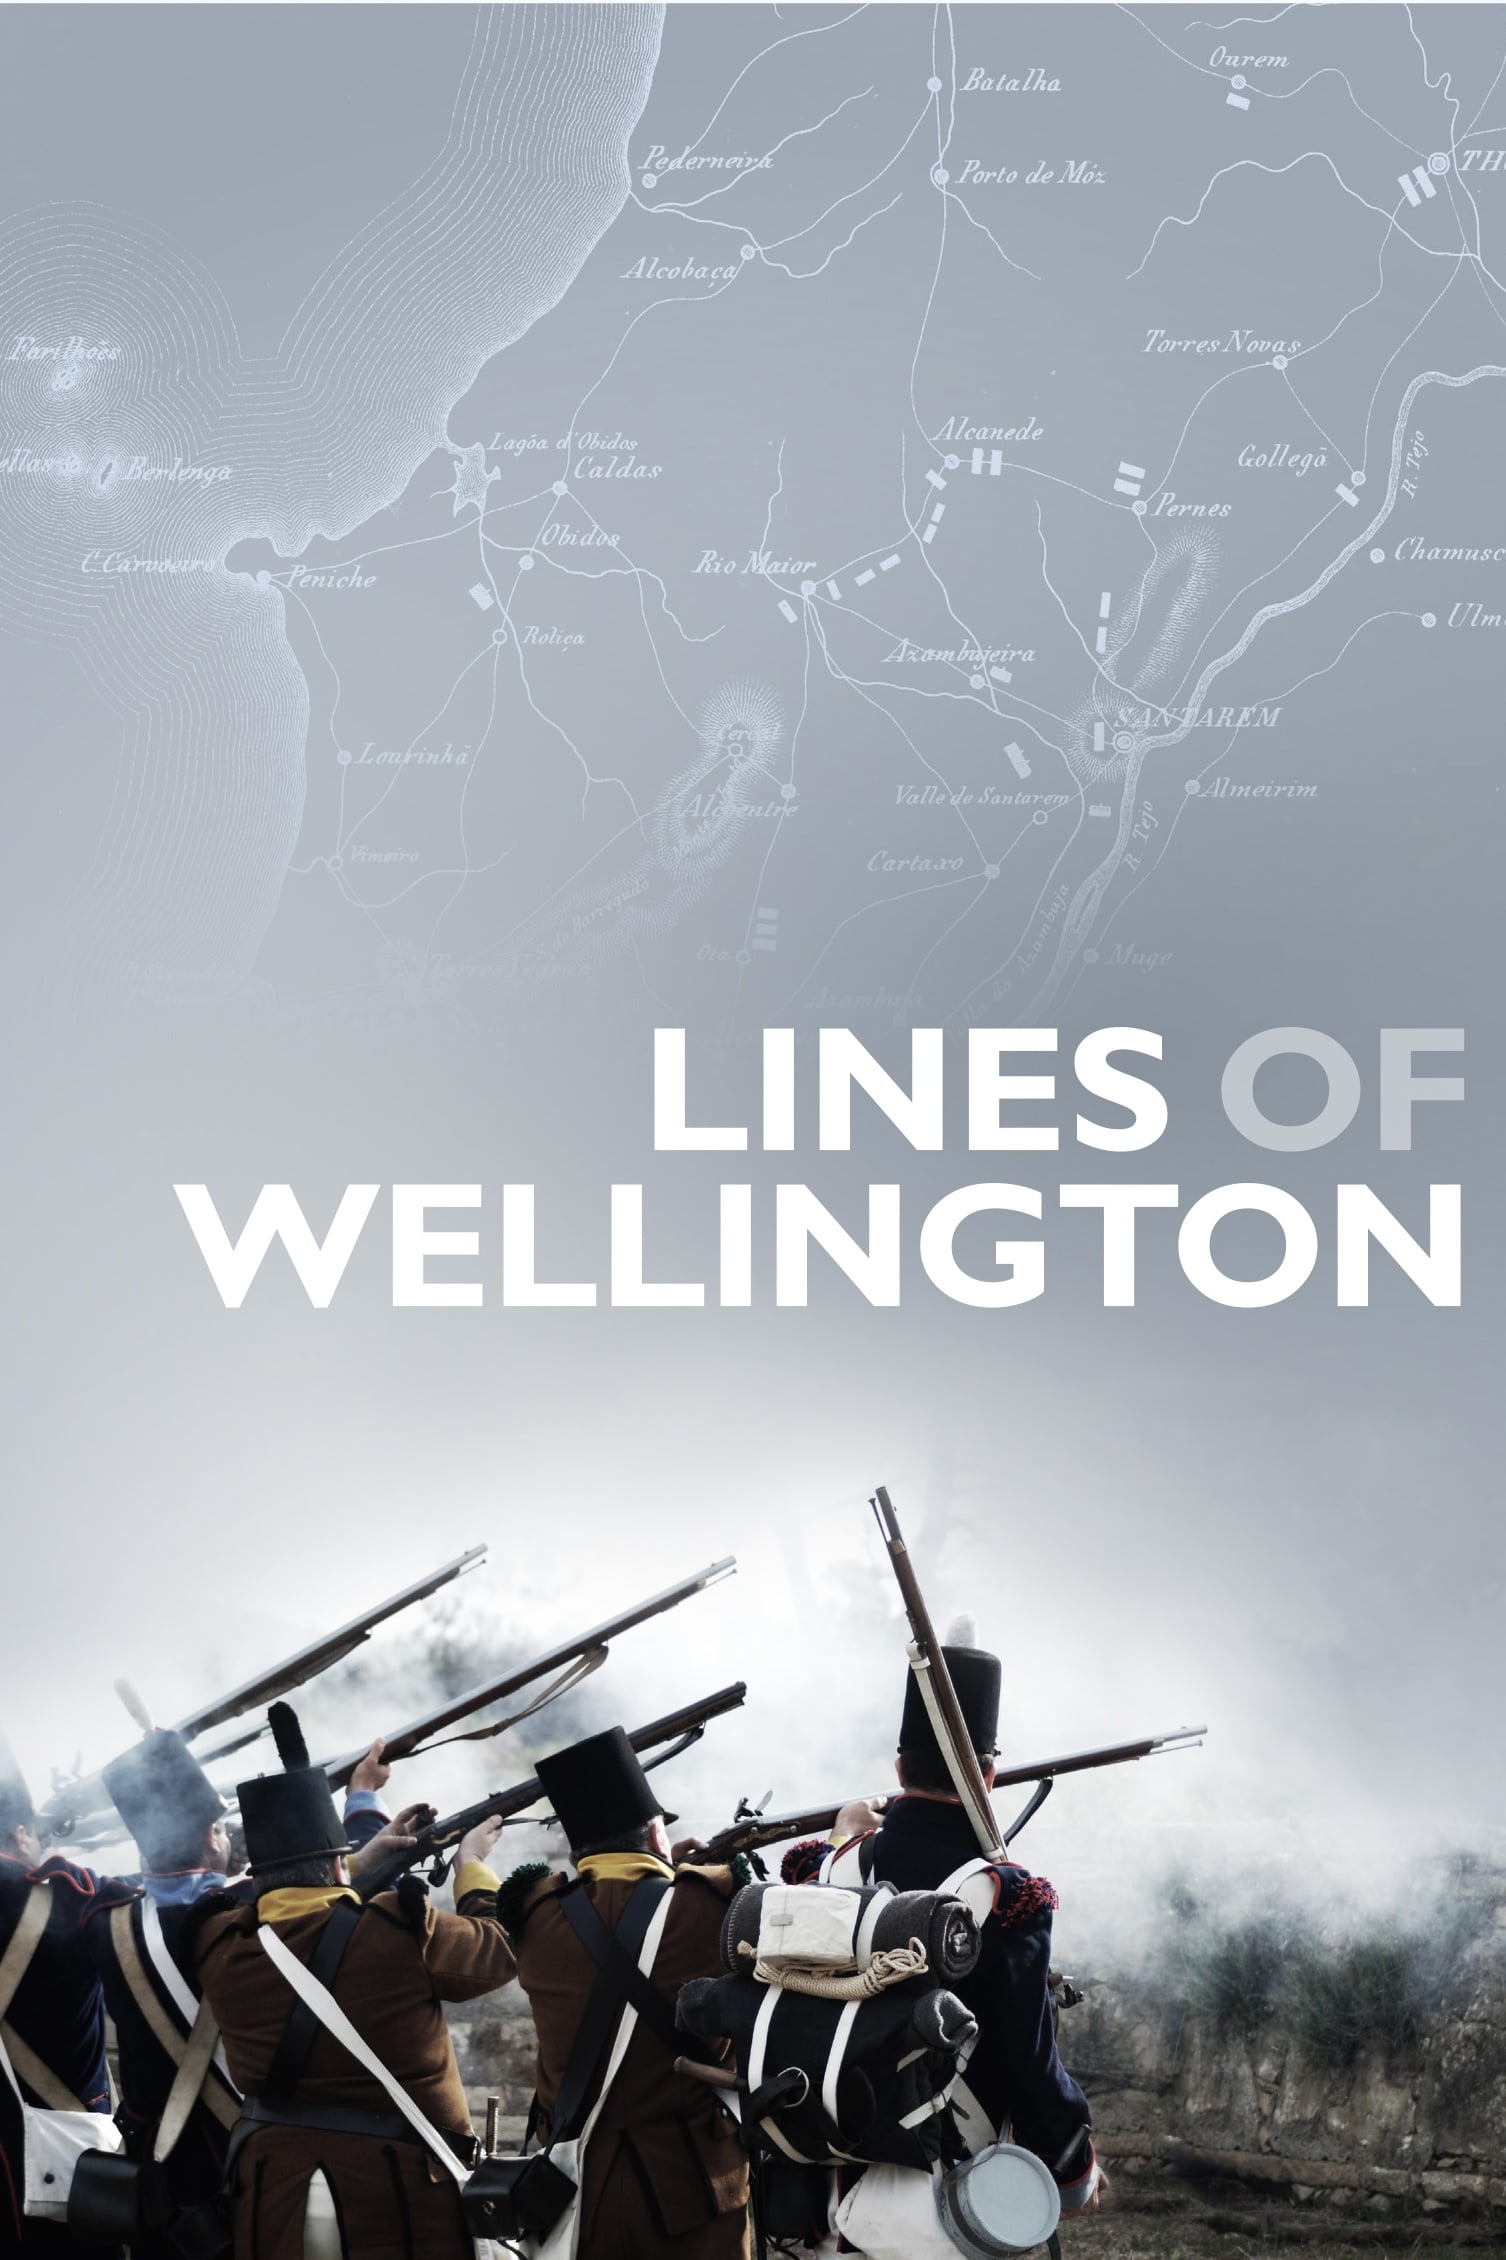 Las líneas de Wellington (2012)